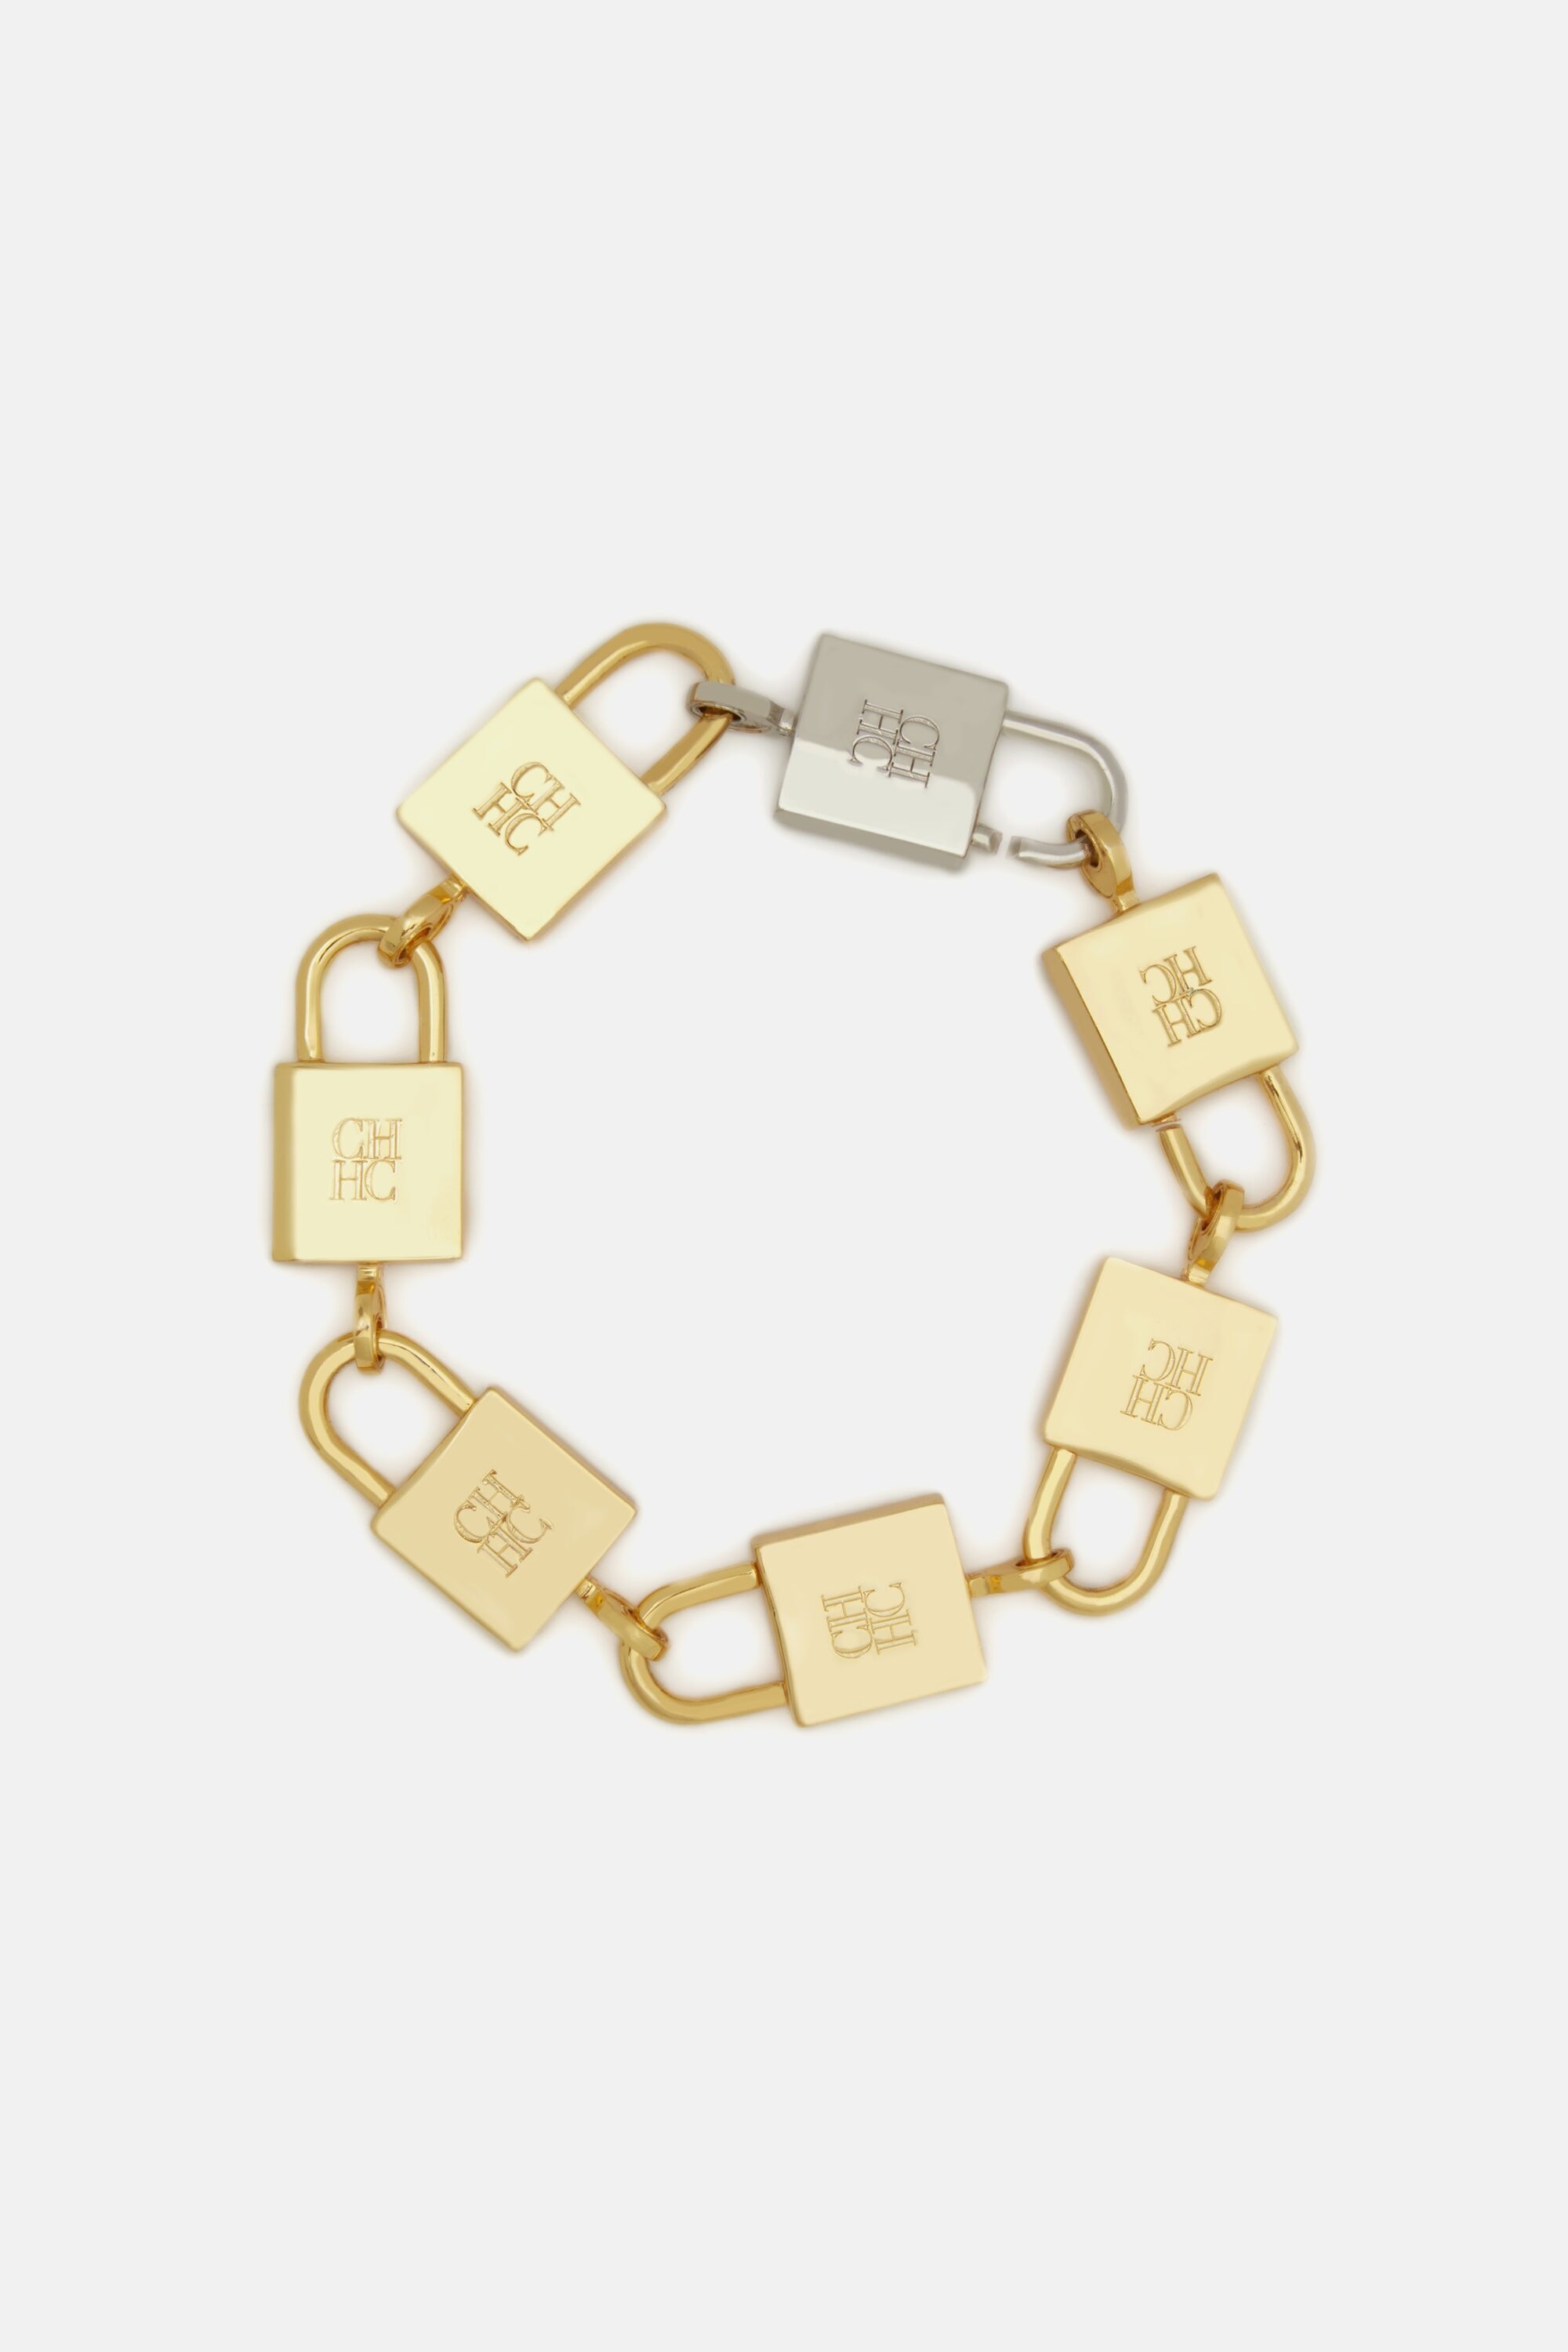 CH Locked bracelet